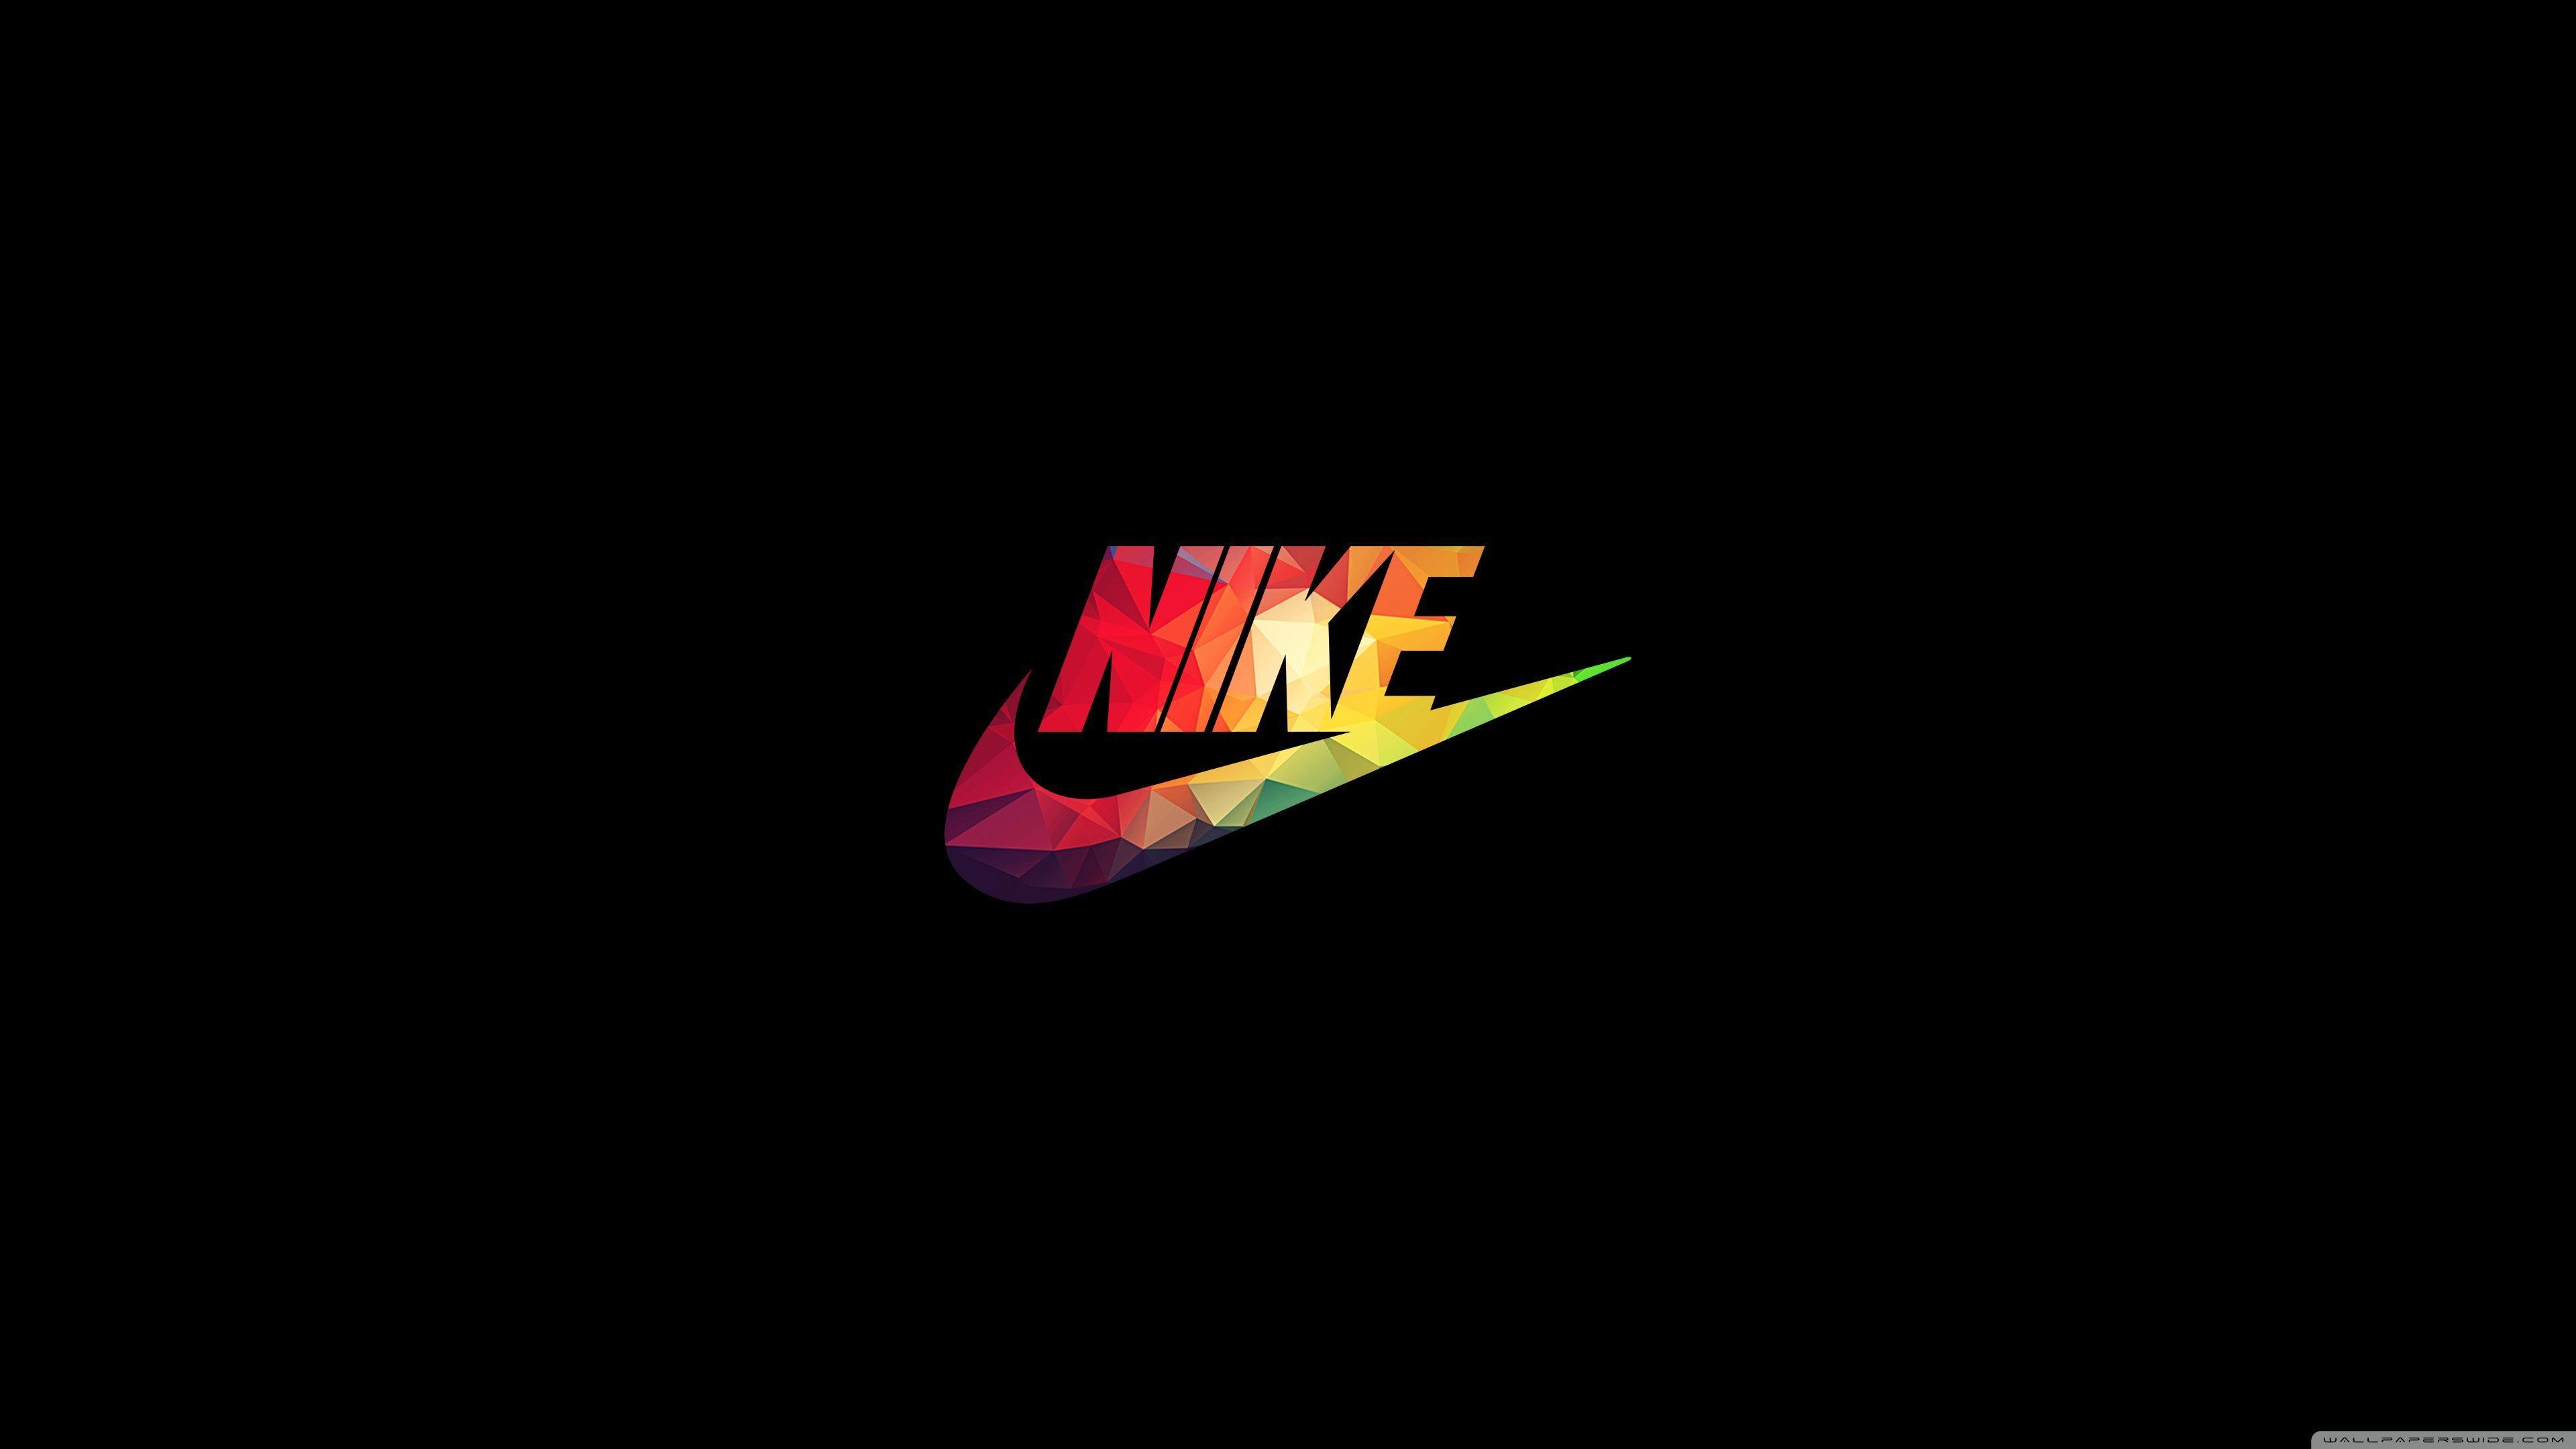 3840 x 2160 · jpeg - Nike 2017 Wallpapers - Wallpaper Cave